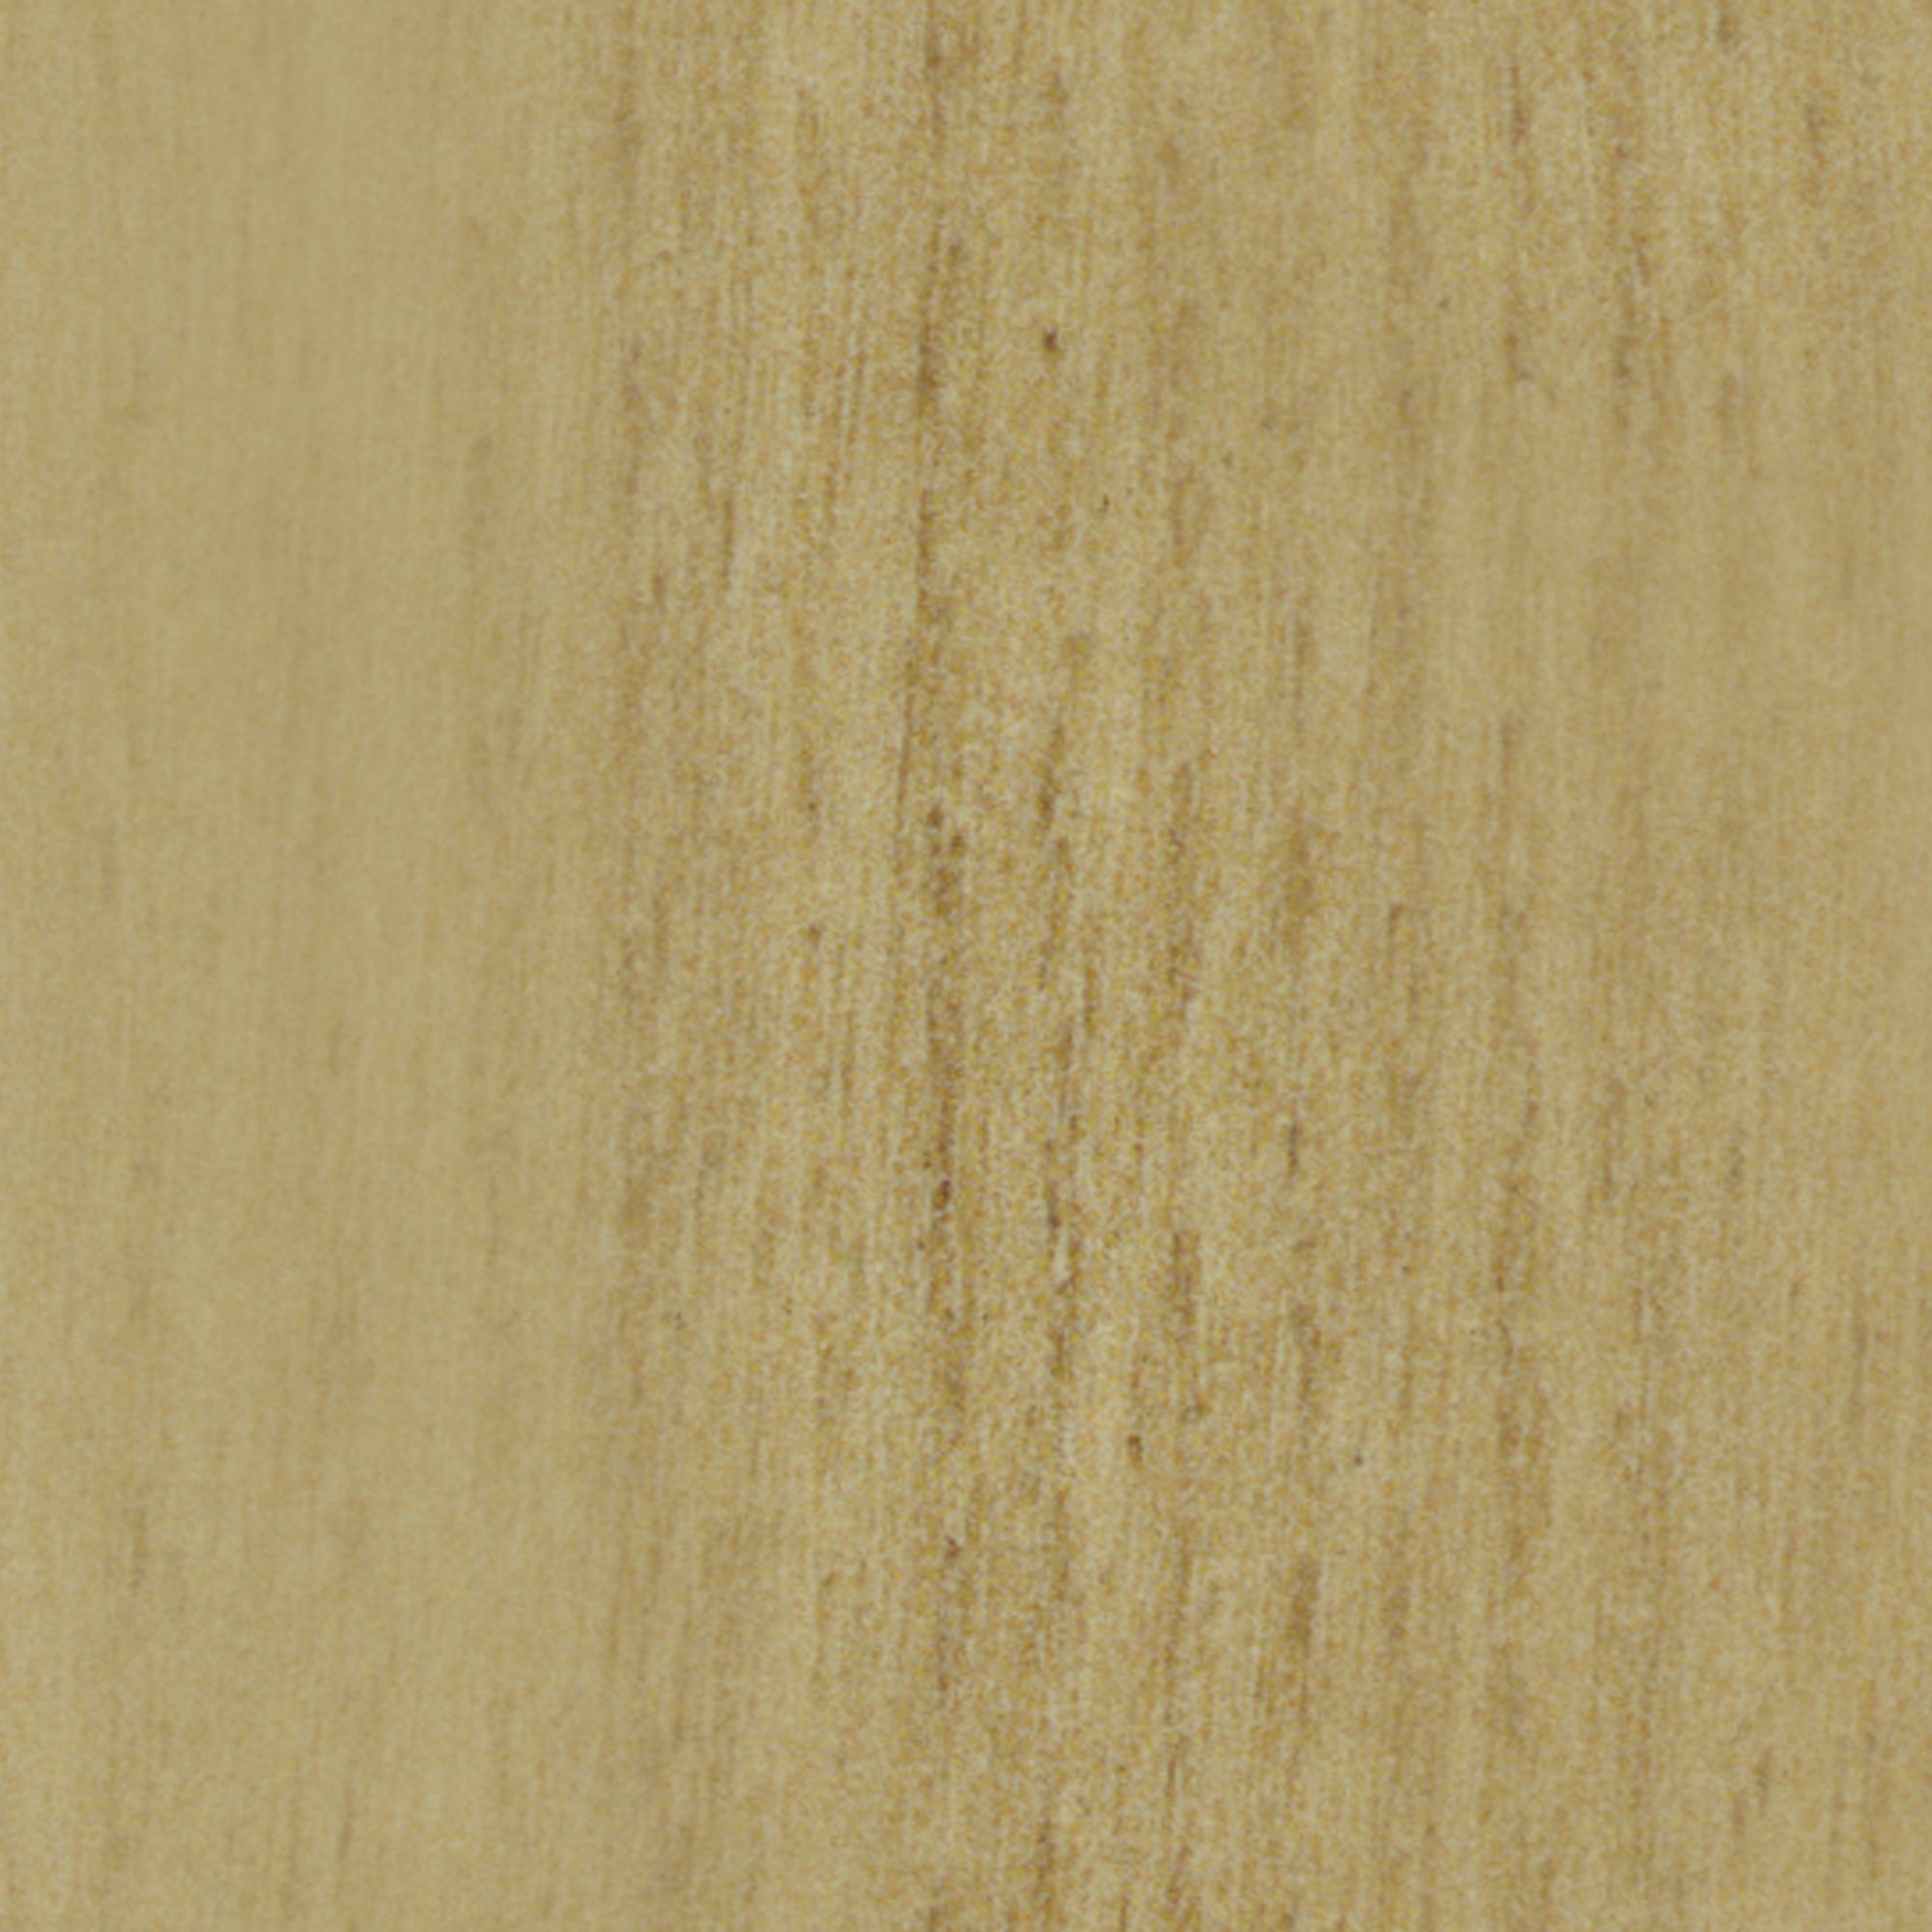 GoodHome DECOR 230 Wood effect Threshold (L)93cm